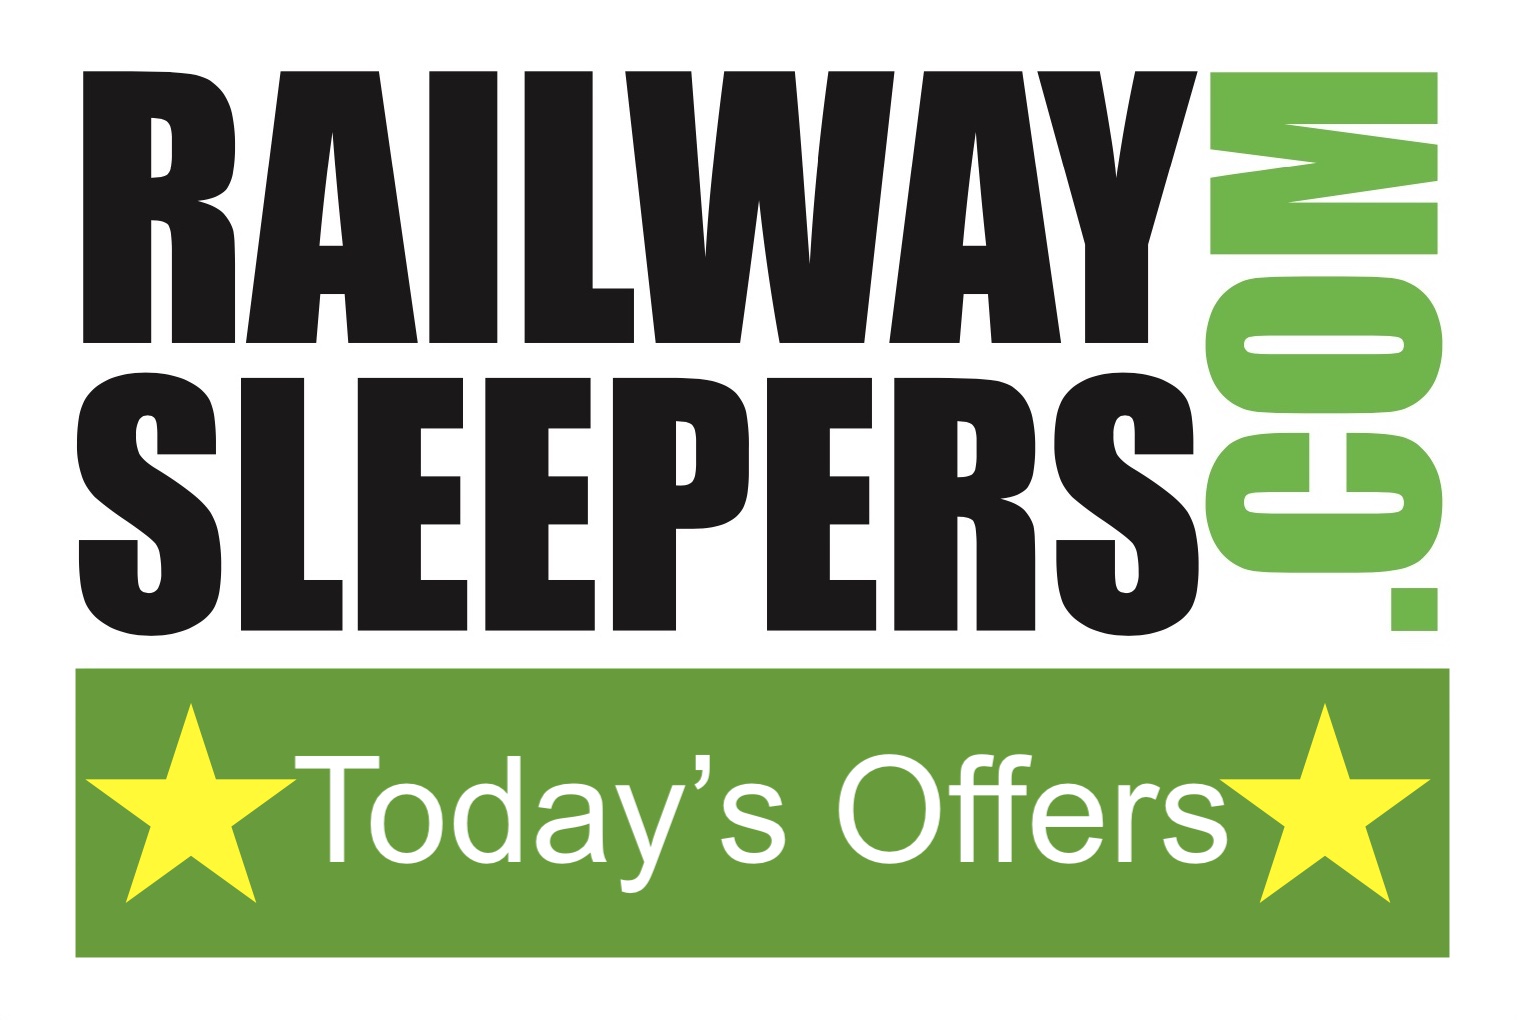 Today's bargains and special railway sleeper orders. Railwaysleepers.com